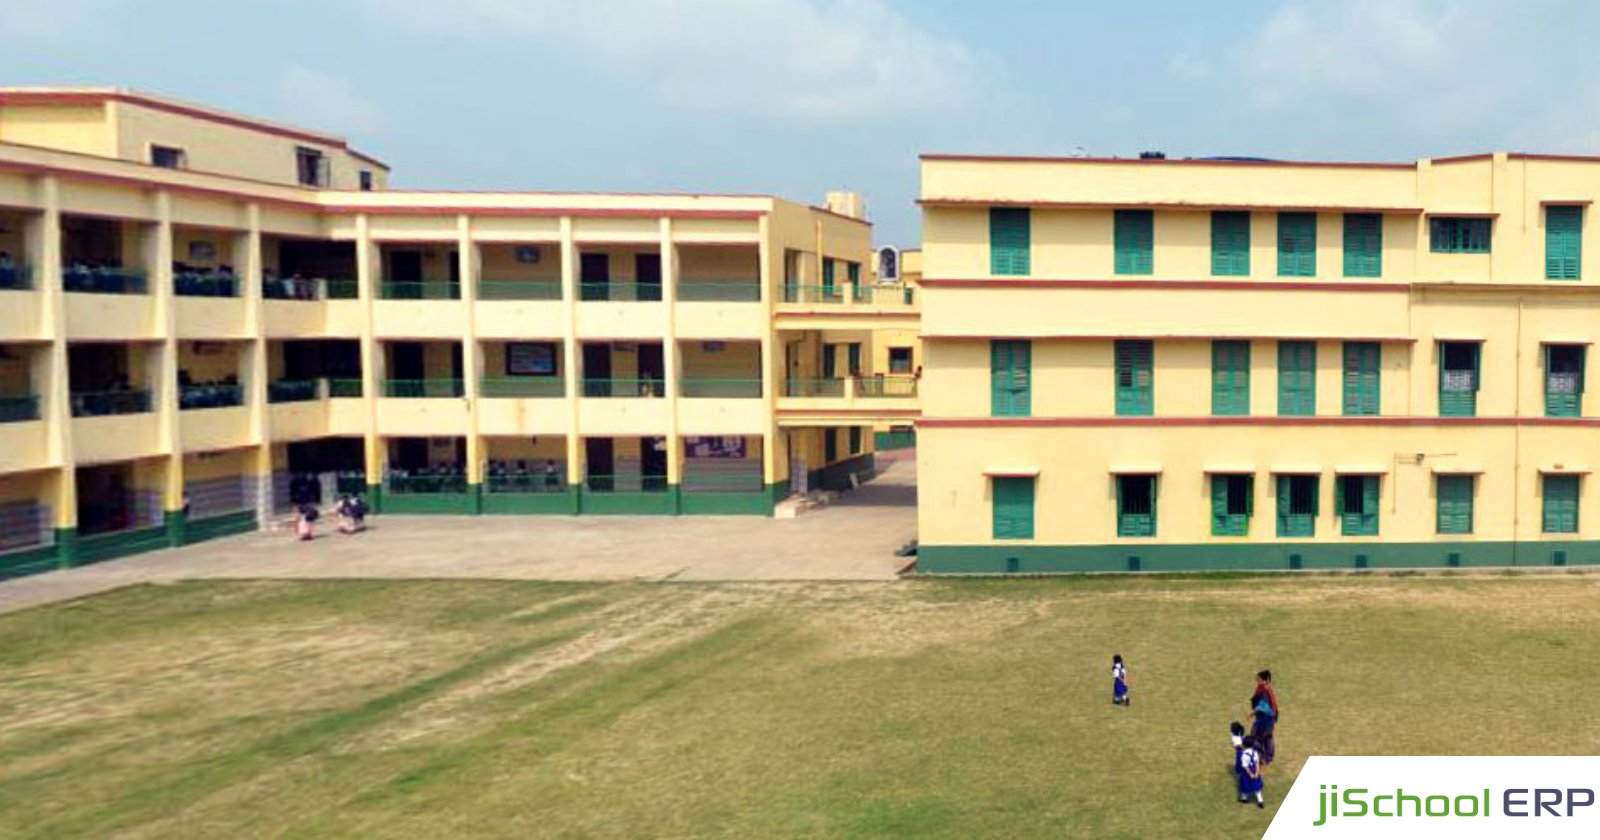 How Ek Onkar Smart School Overcomes the Fee Management Issues With jiSchoolERP